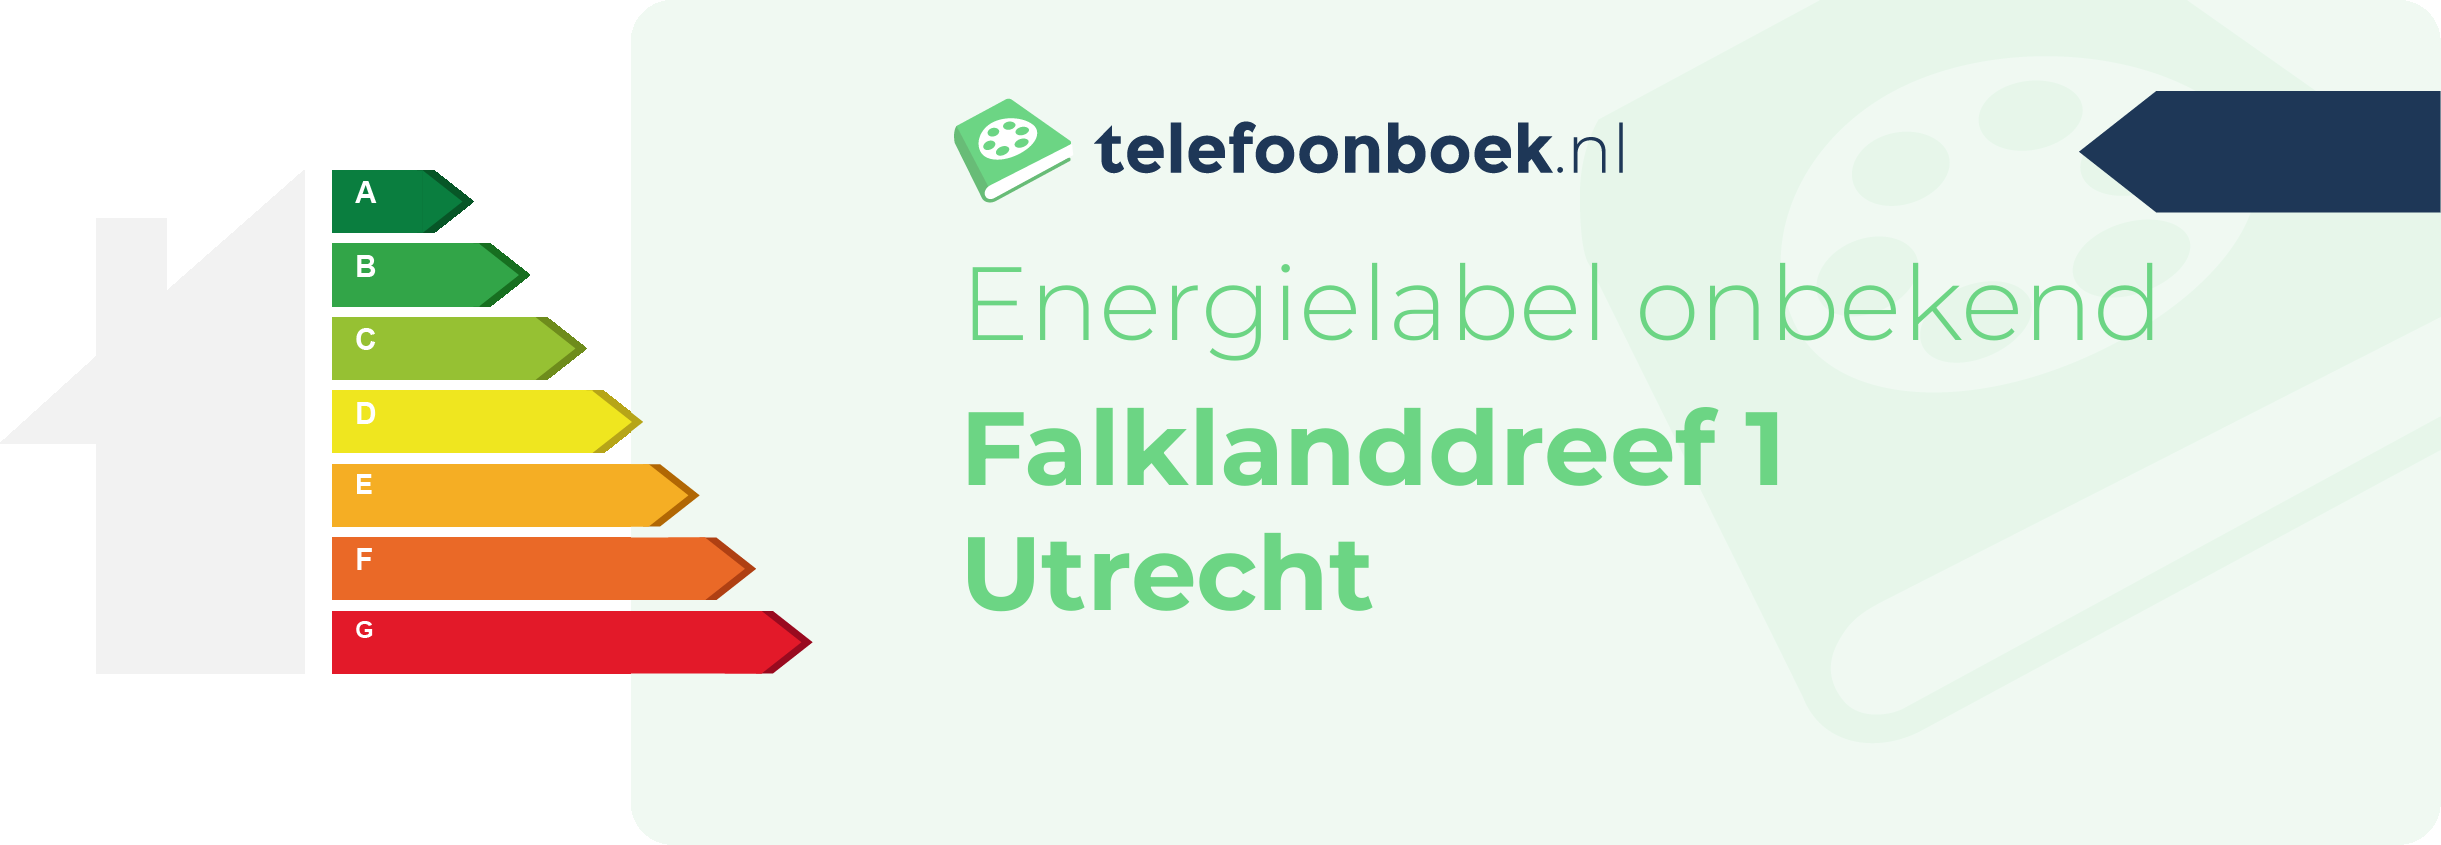 Energielabel Falklanddreef 1 Utrecht